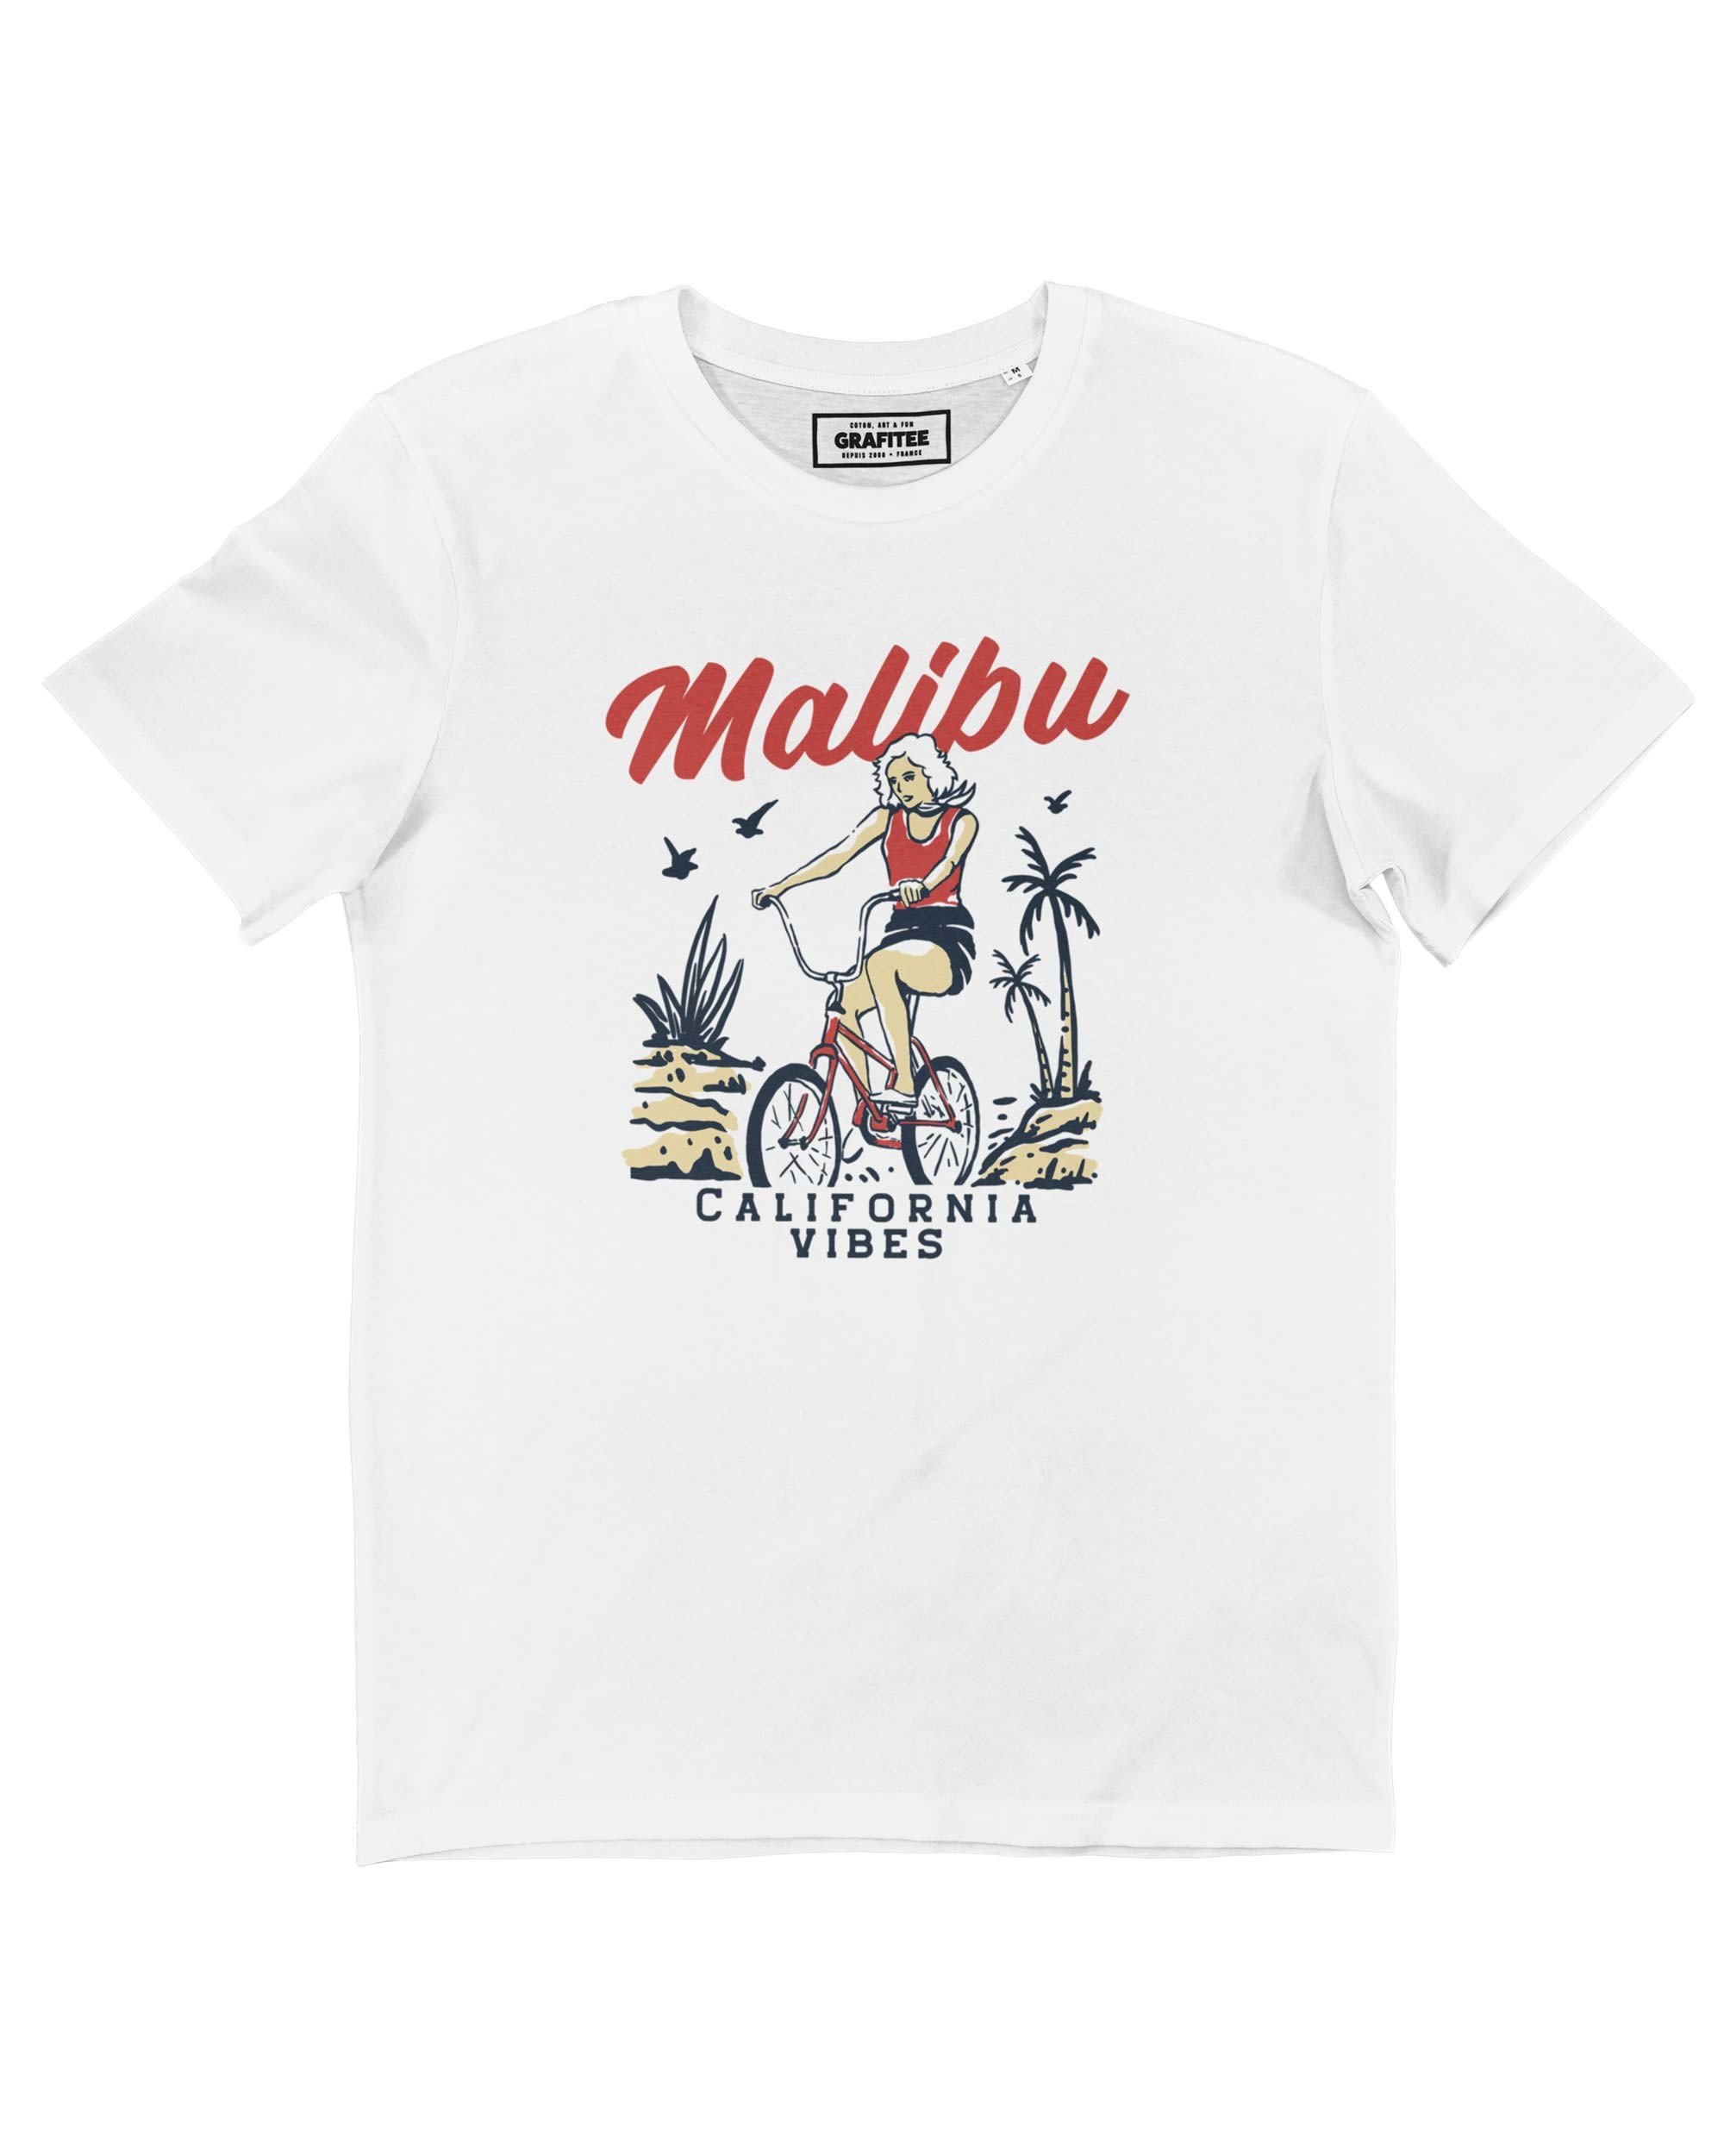 T-shirt Malibu Girl Grafitee